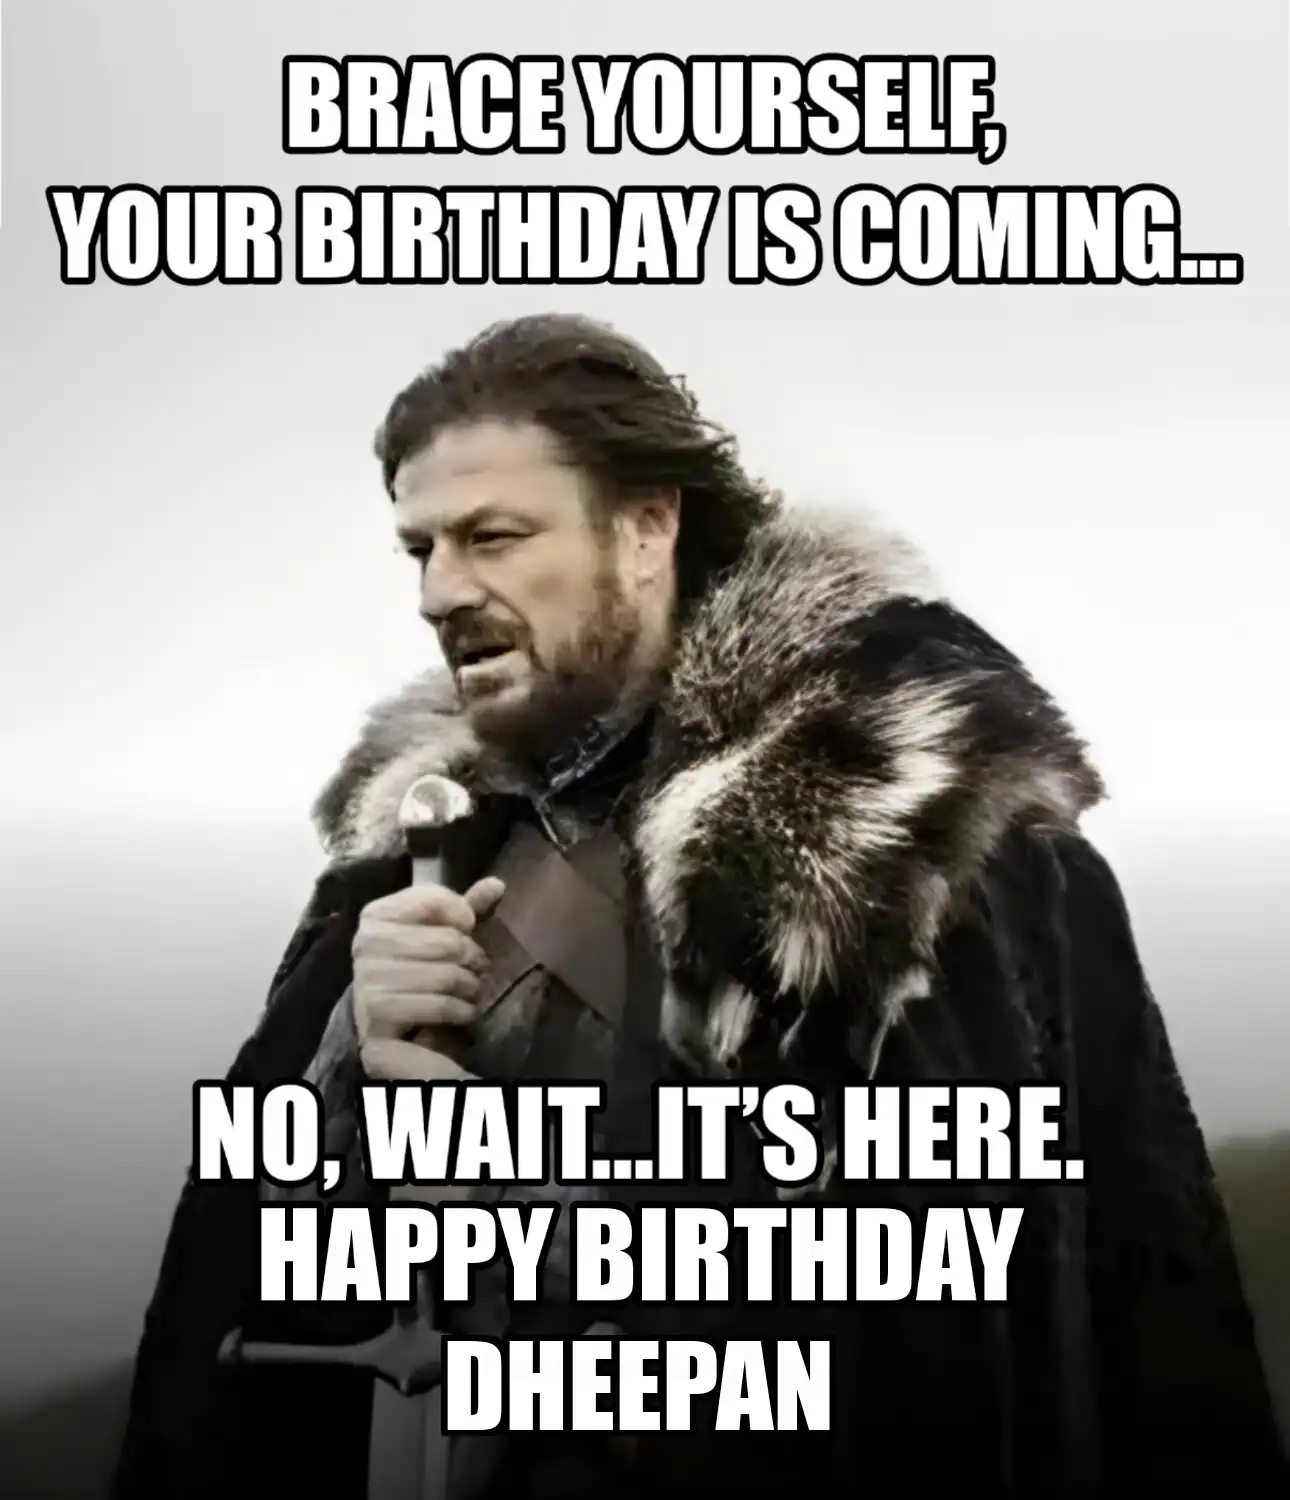 Happy Birthday Dheepan Brace Yourself Your Birthday Is Coming Meme